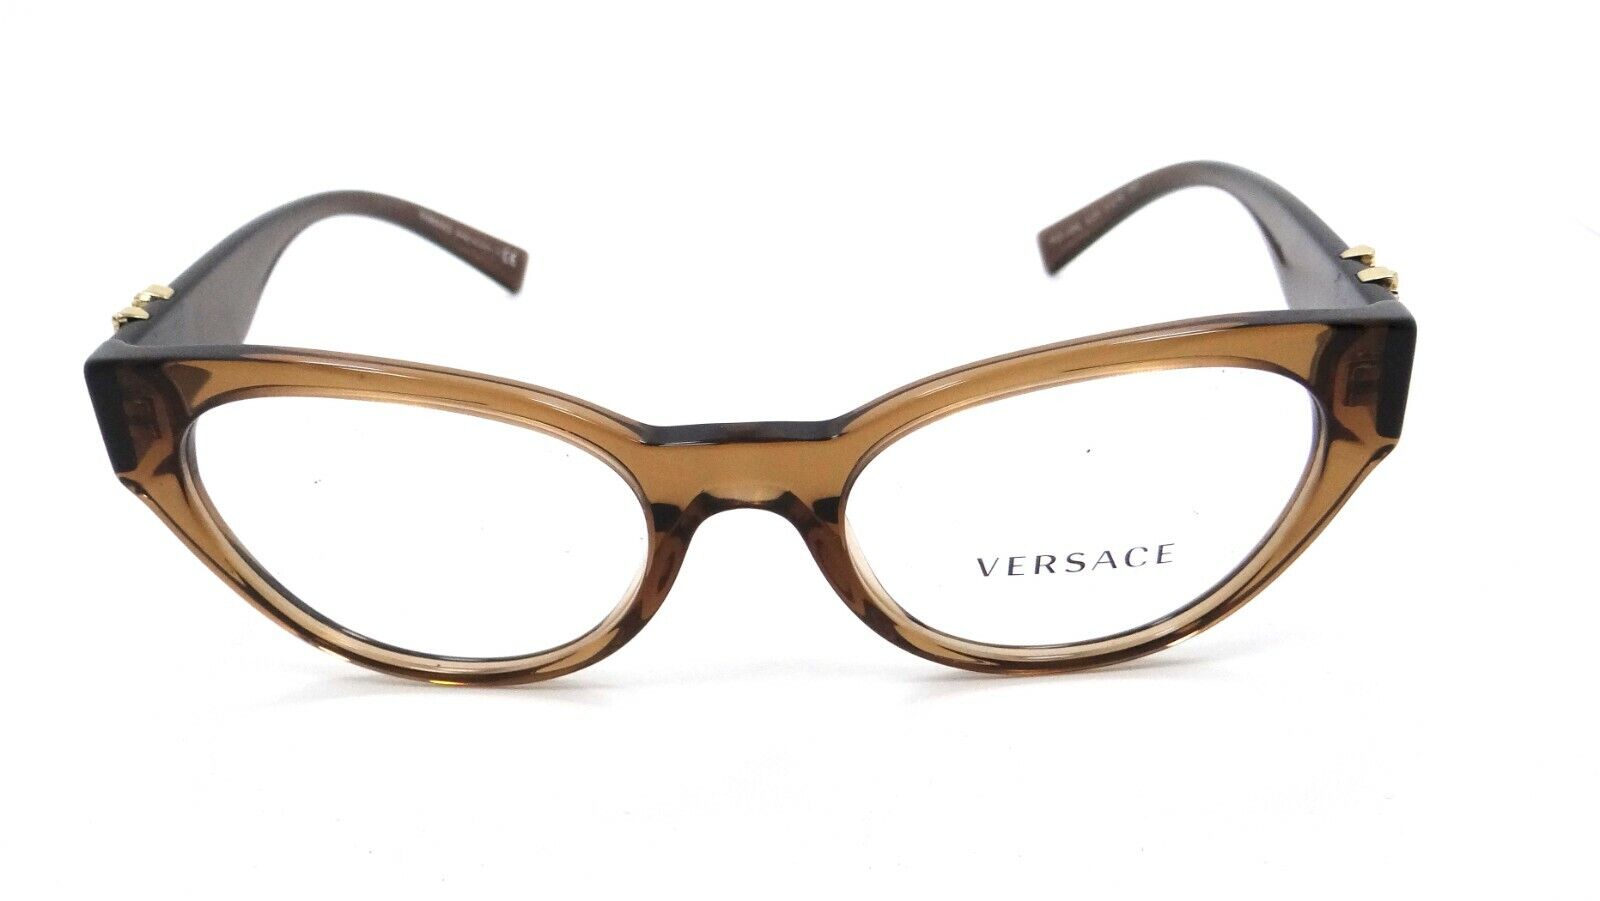 Versace Eyeglasses Frames VE 3282 5028 51-19-140 Transparent Brown Italy-8056597159654-classypw.com-2